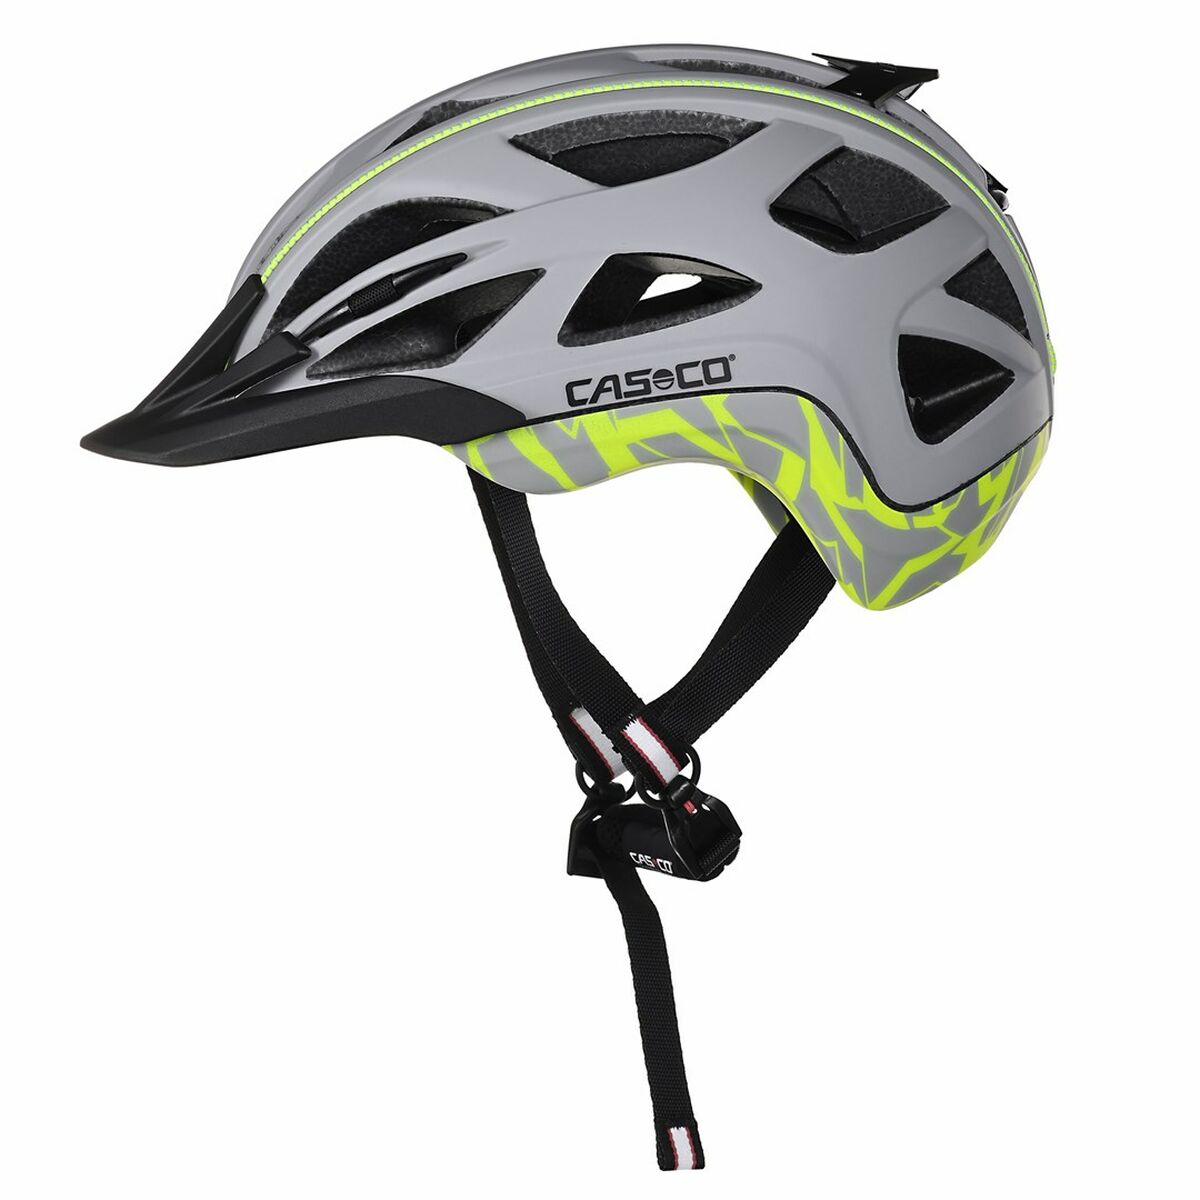 Adult's Cycling Helmet Casco ACTIV2 Silver 58-62 cm